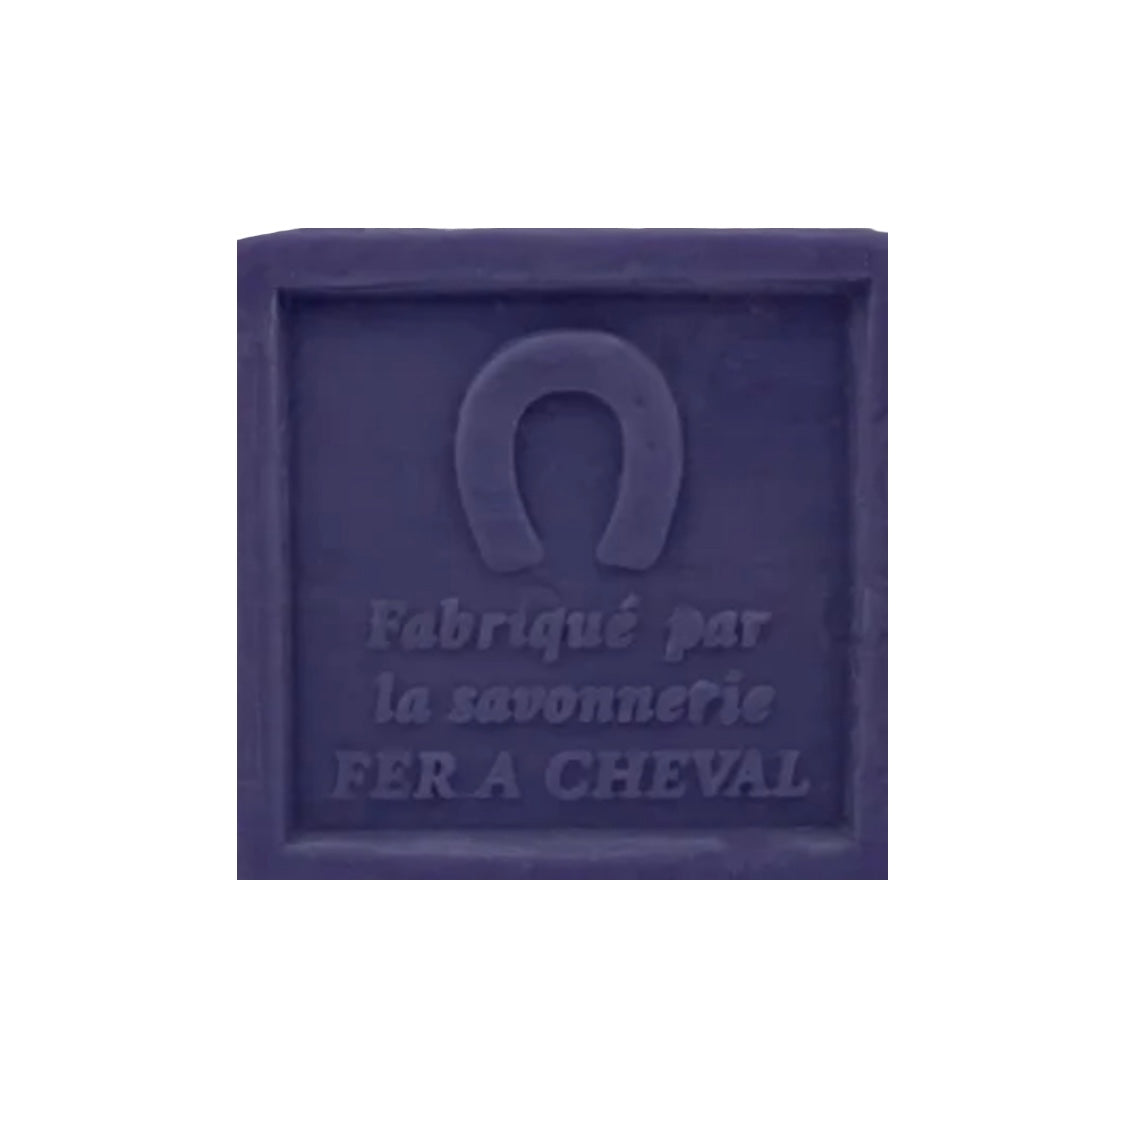 300g Fer à Cheval French Soap Cube Lavender